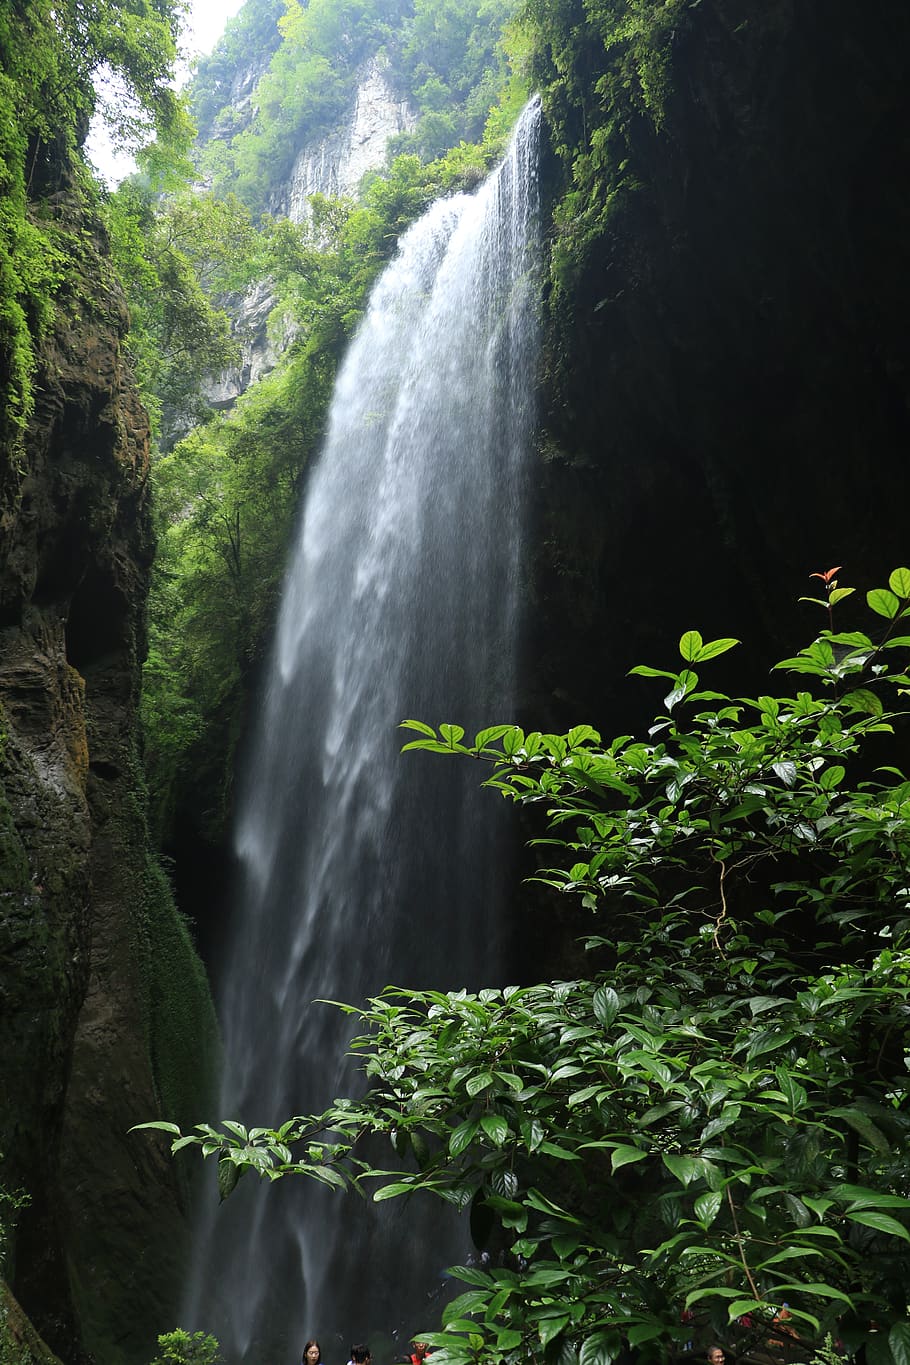 sinkhole, to sew, deep ravine, falls, nature, wulong, water, waterfall, beauty in nature, scenics - nature